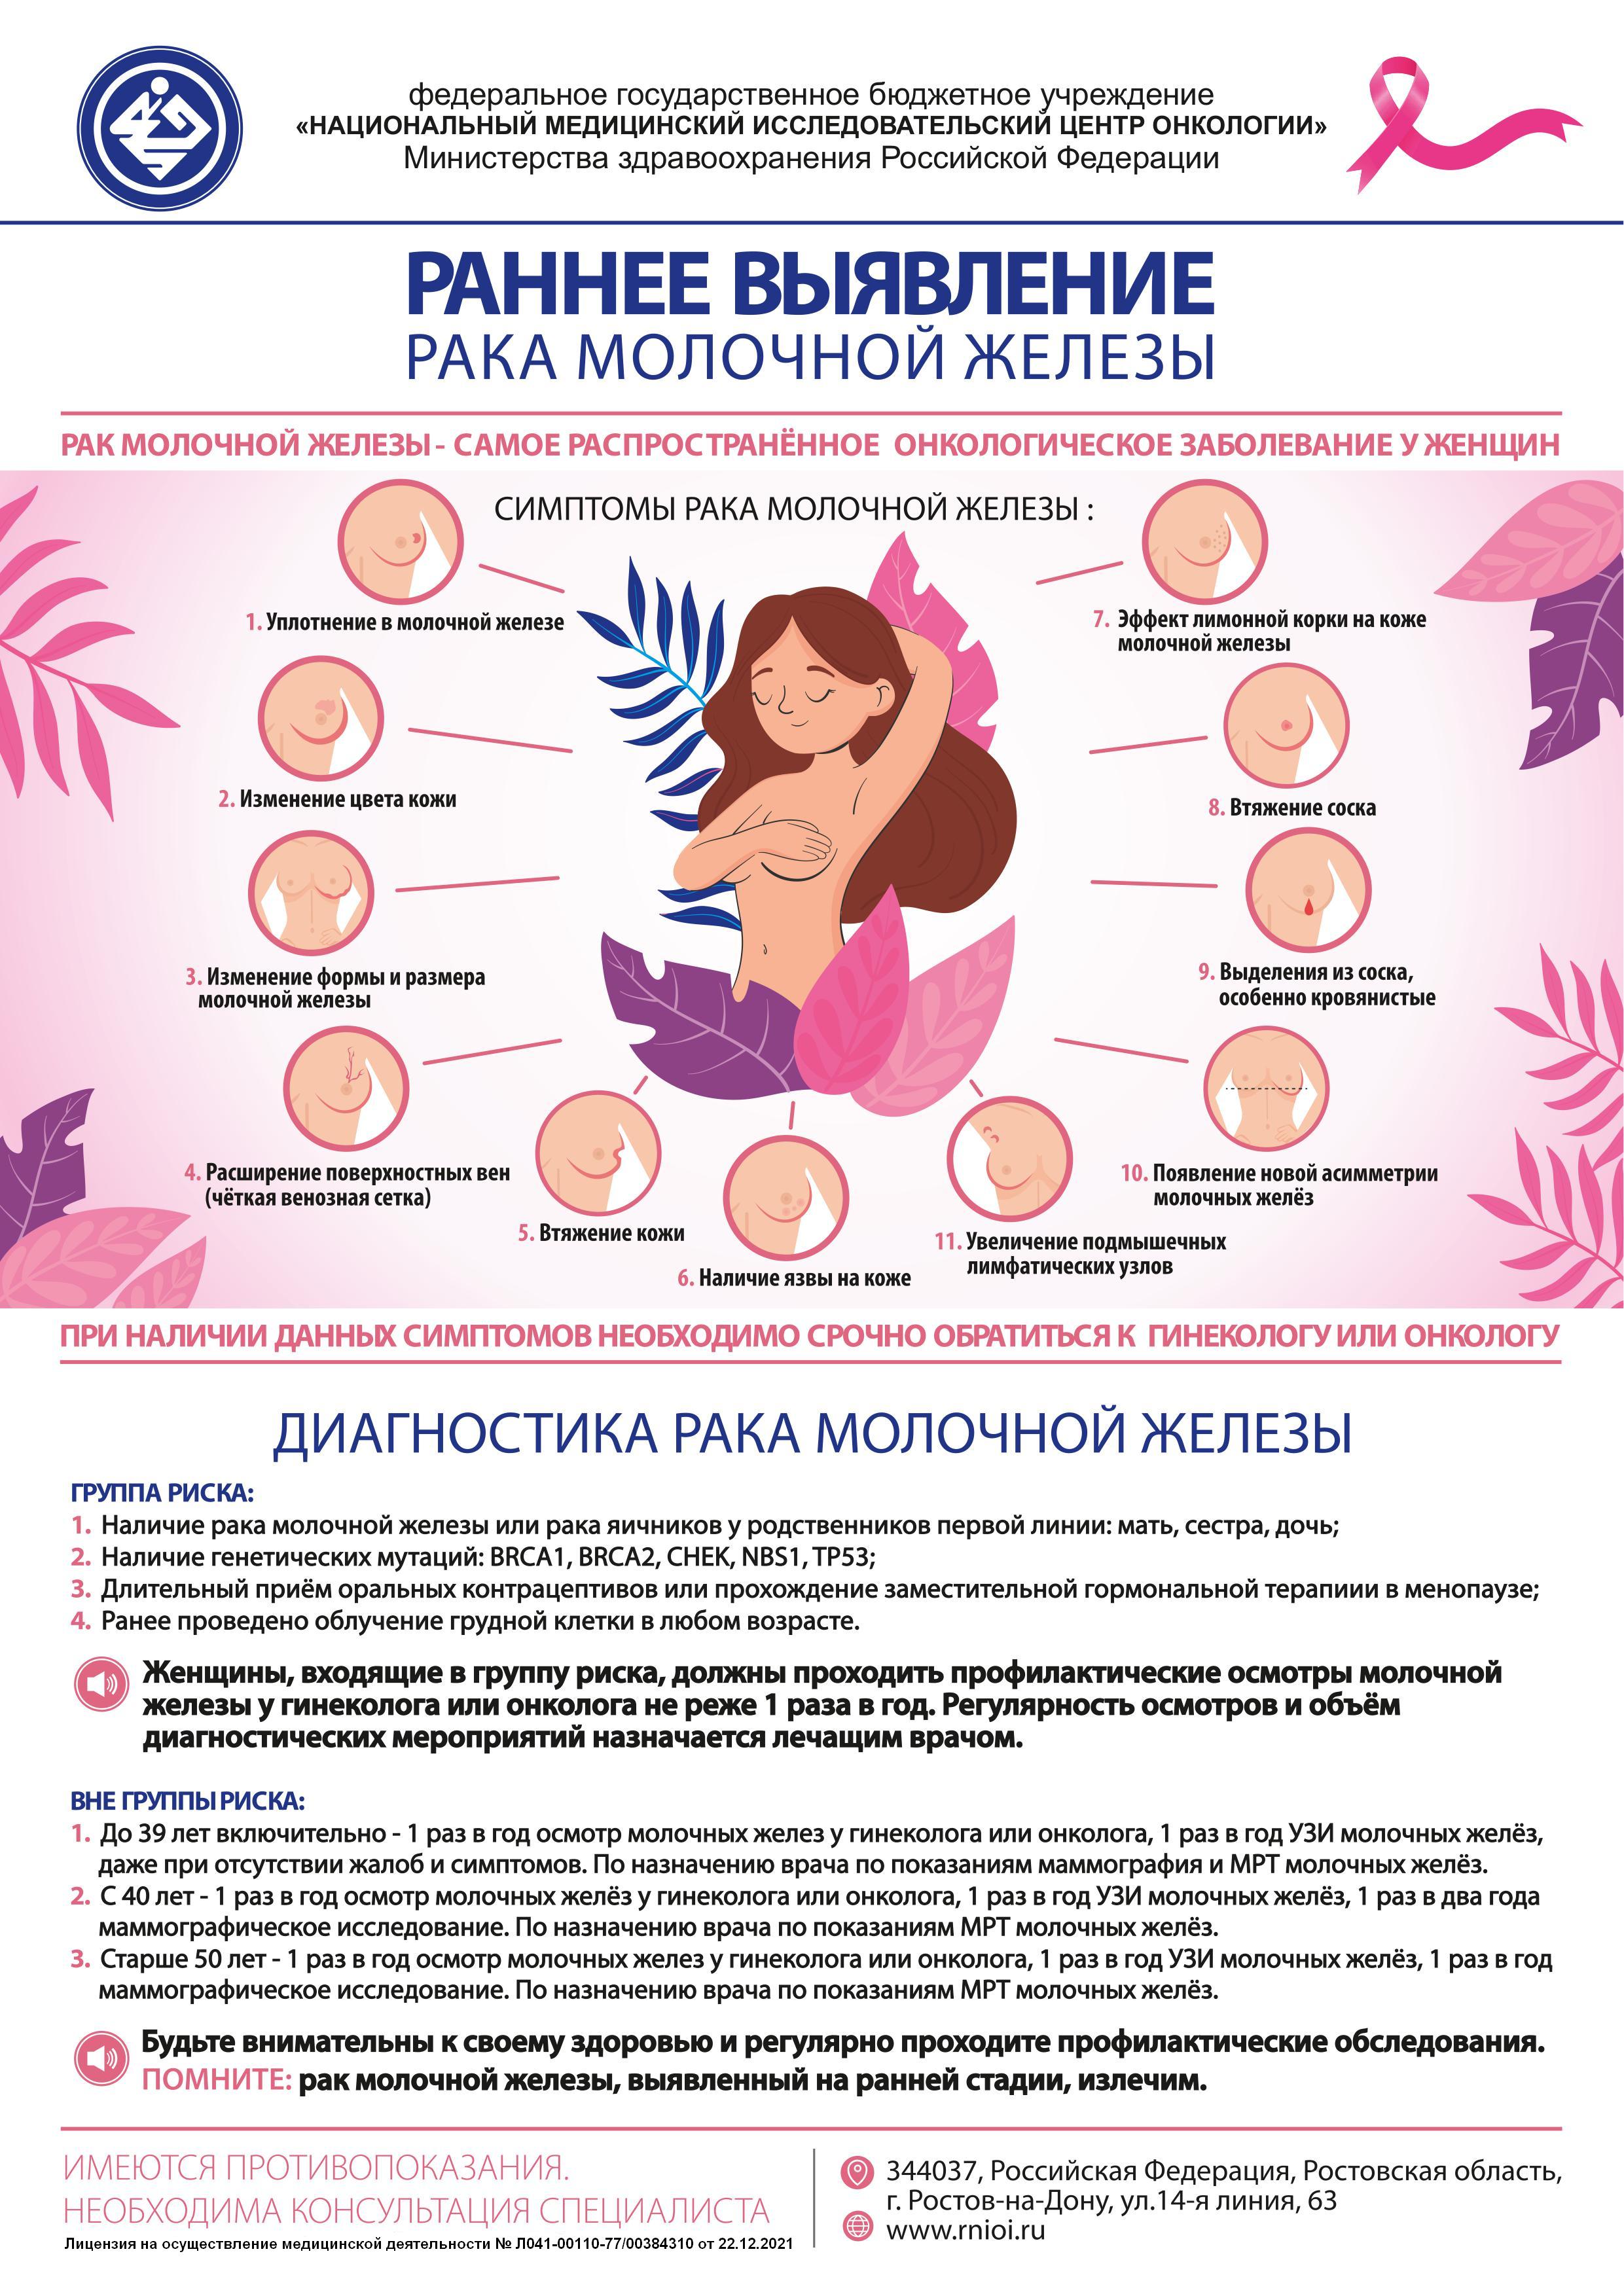 признаки рака в груди у женщин фото 17